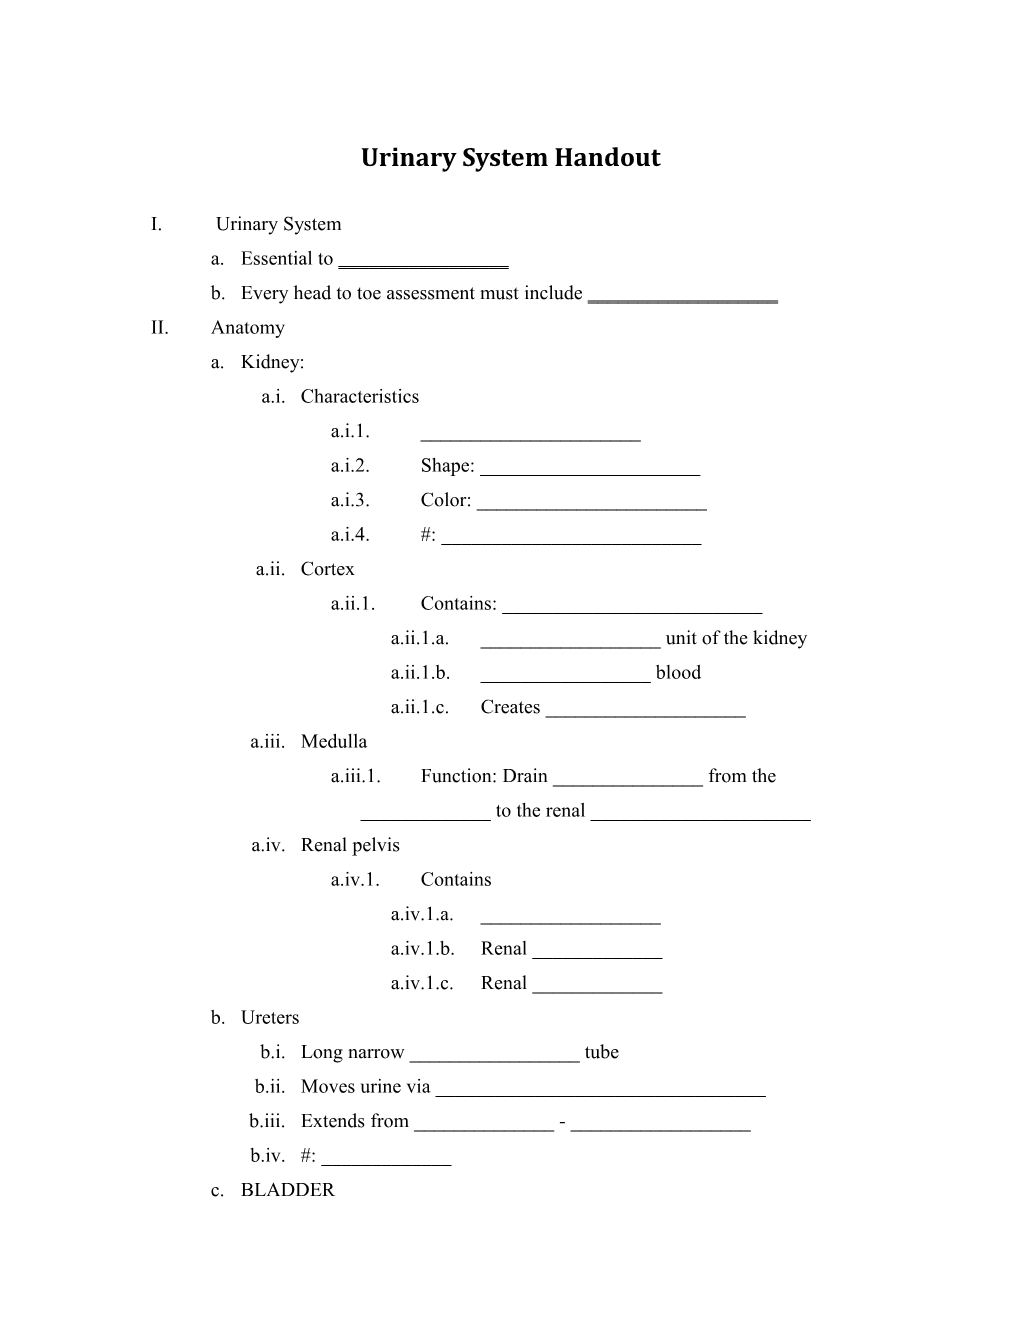 Urinary System Handout